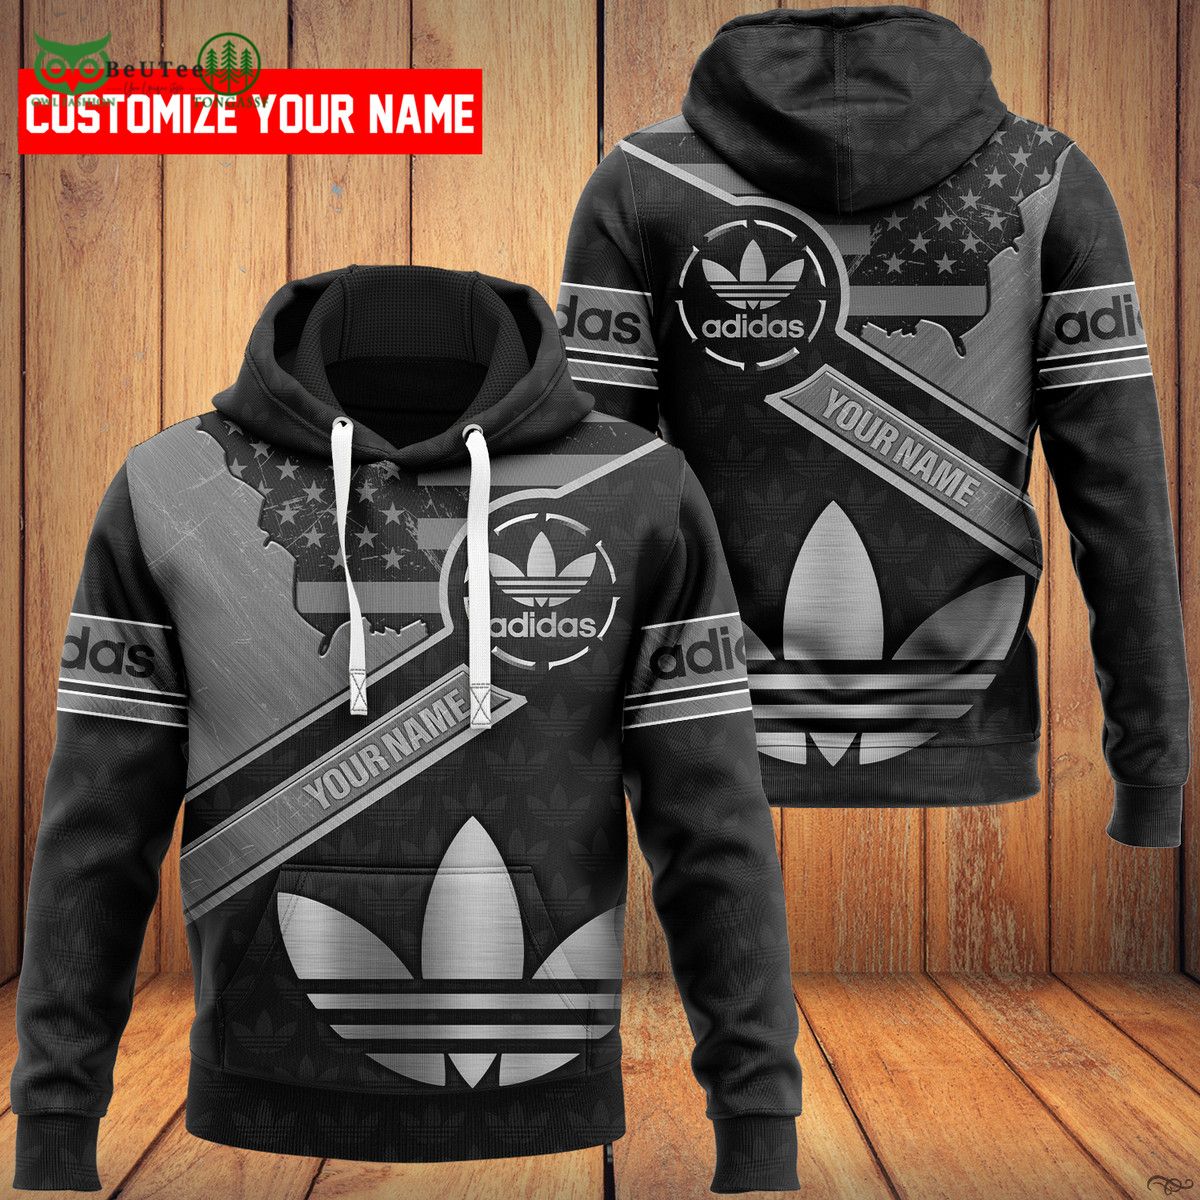 adidas black americ flag personalized hoodie and pants 1 uI775